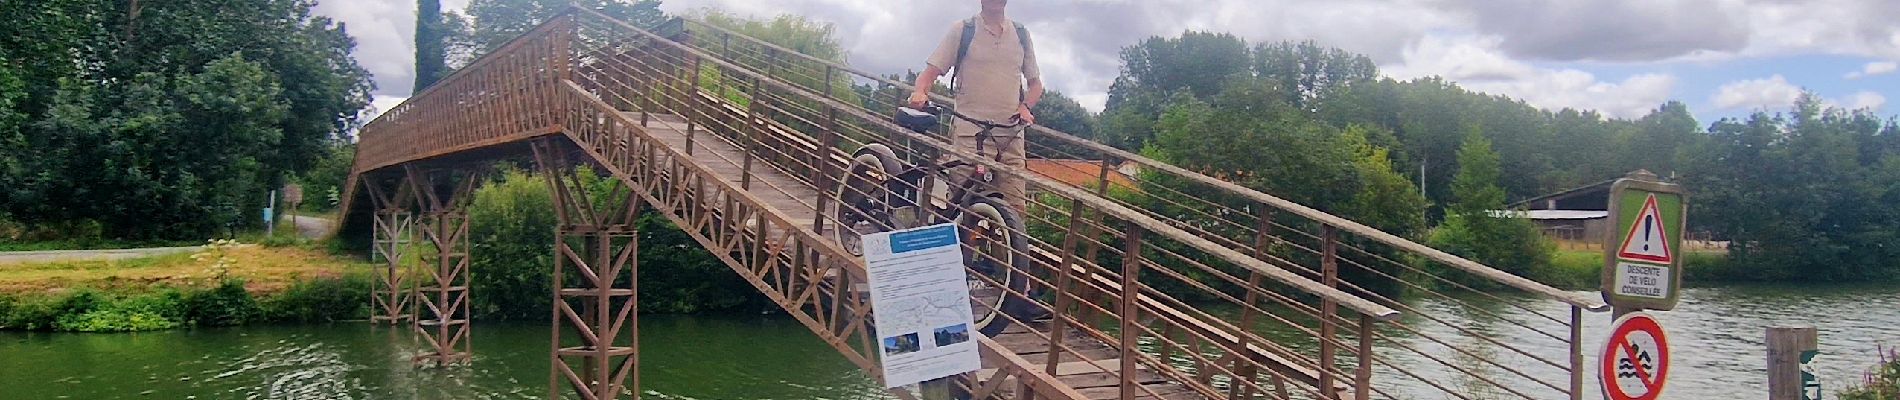 Trail Hybrid bike Le Mazeau - Cyclo dans le marais Poitevin - Photo